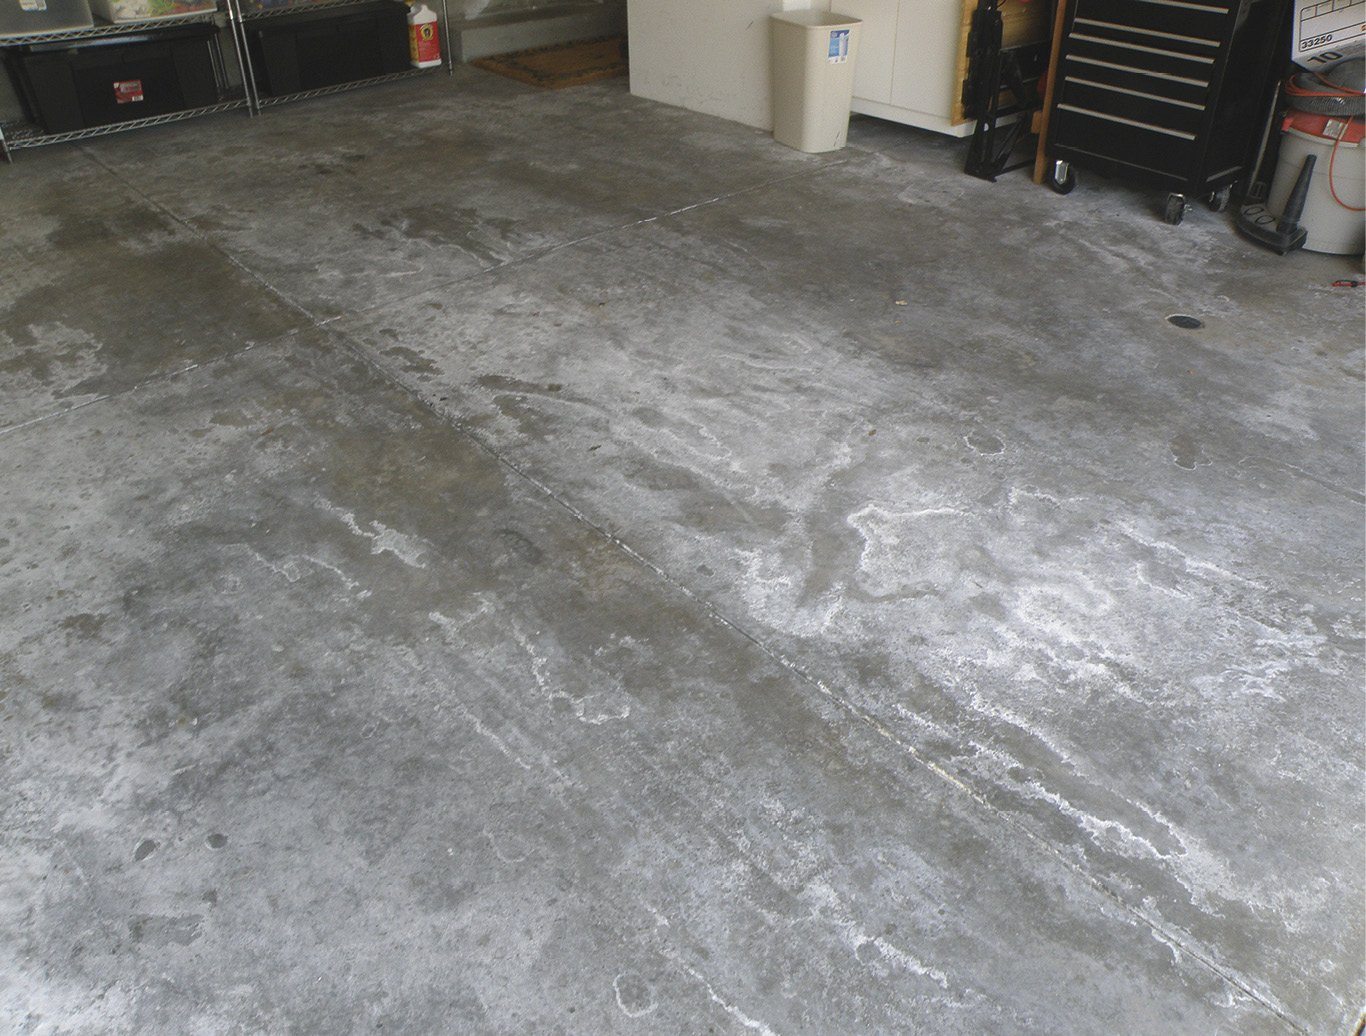 How to Prevent Moisture Problems on Concrete Floors